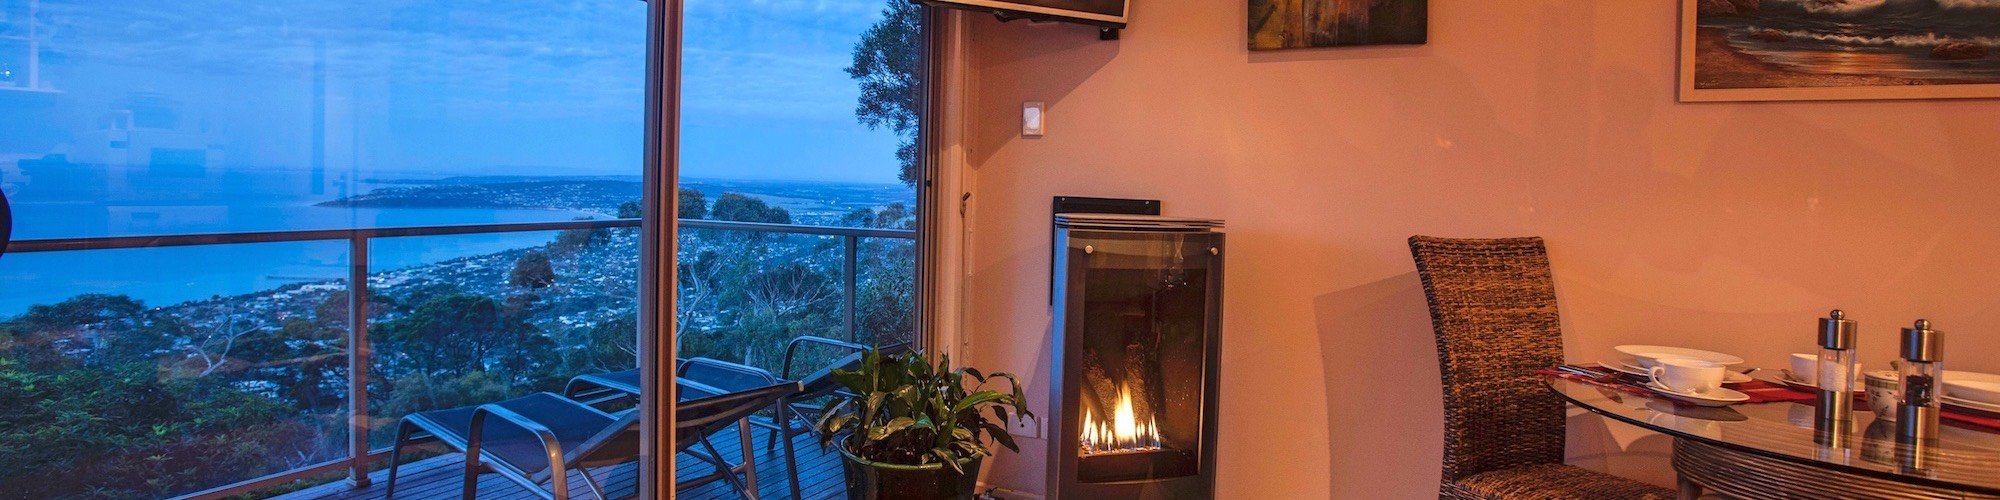 Elegant gas log fireplace at dusk - Summit Views Eagle Nest 